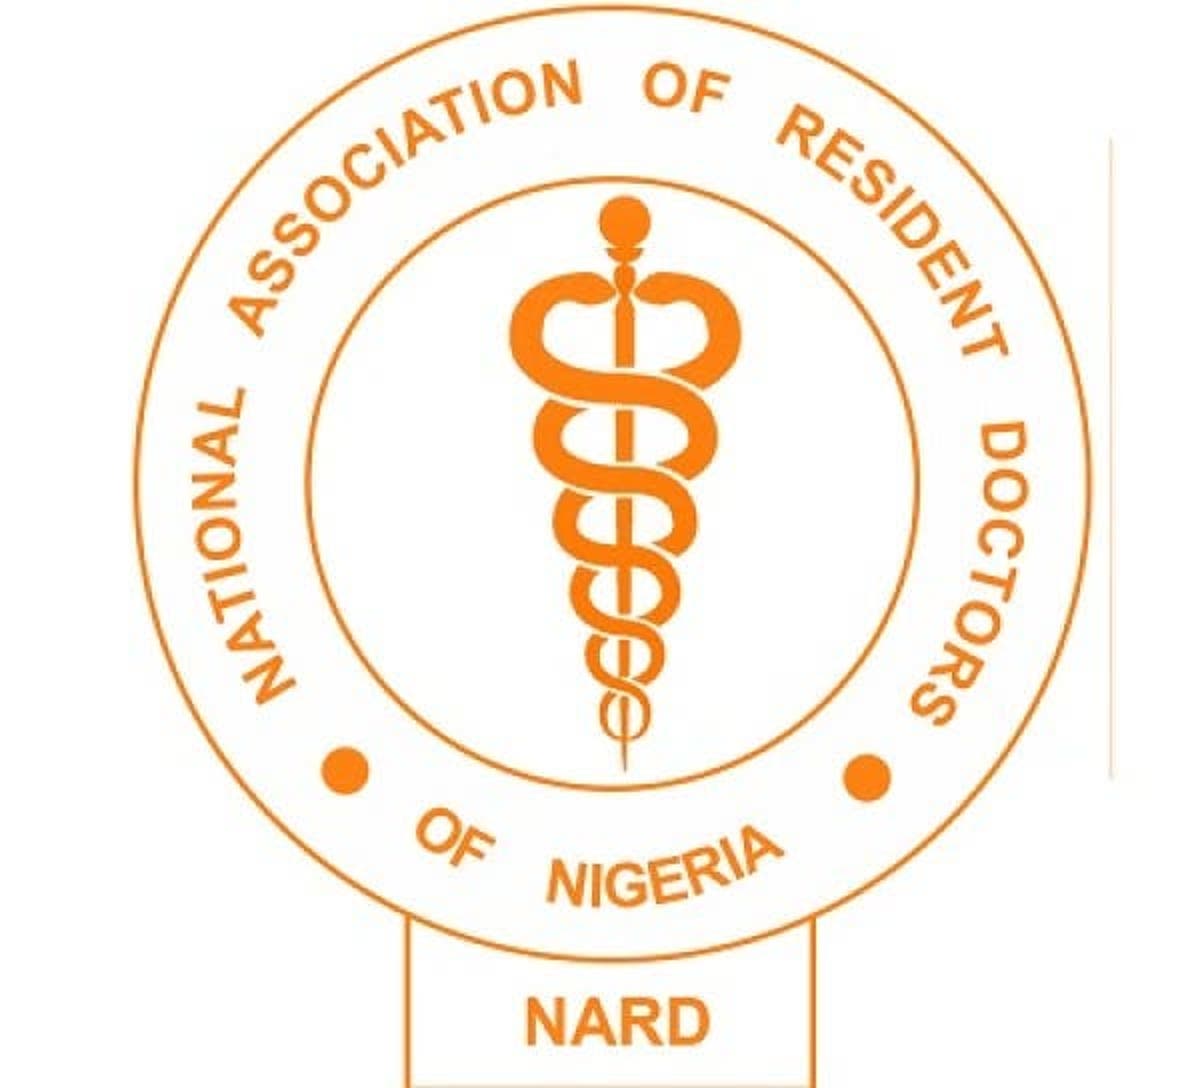 National Association of Resident Doctors (NARD)